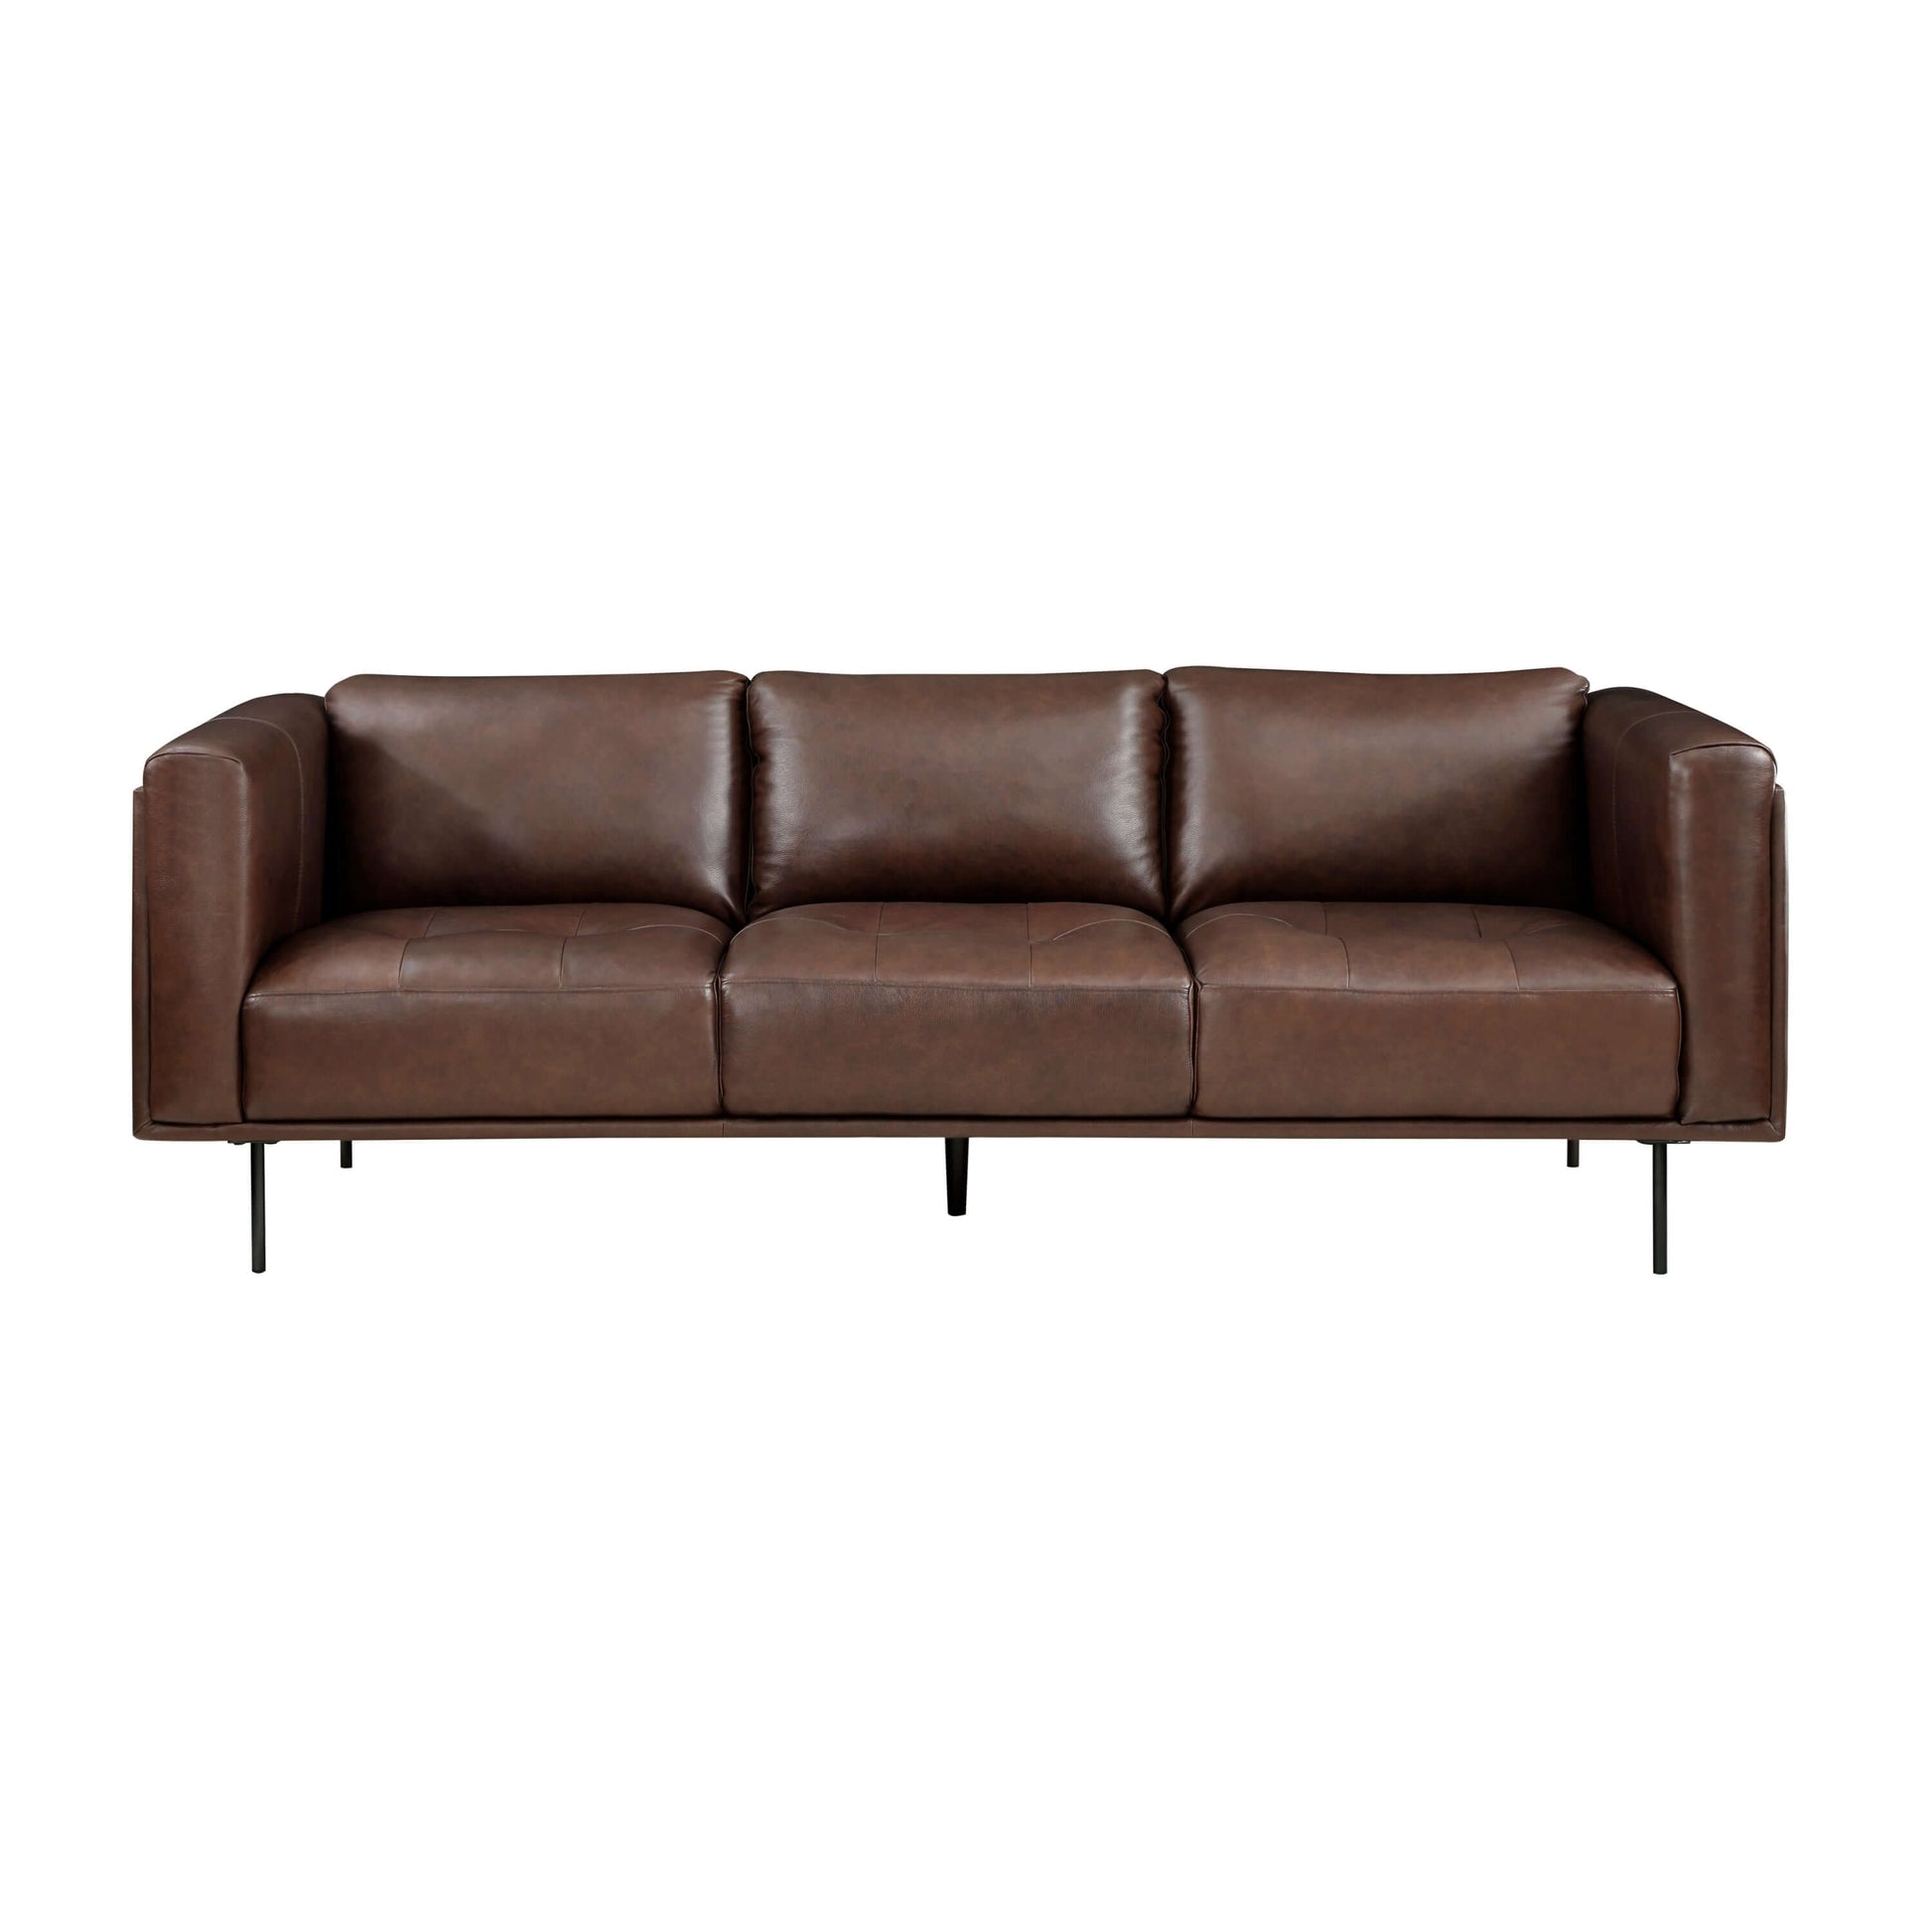 MCM Styled Brown Genuine Leather Sofa 88” - Revel Sofa 